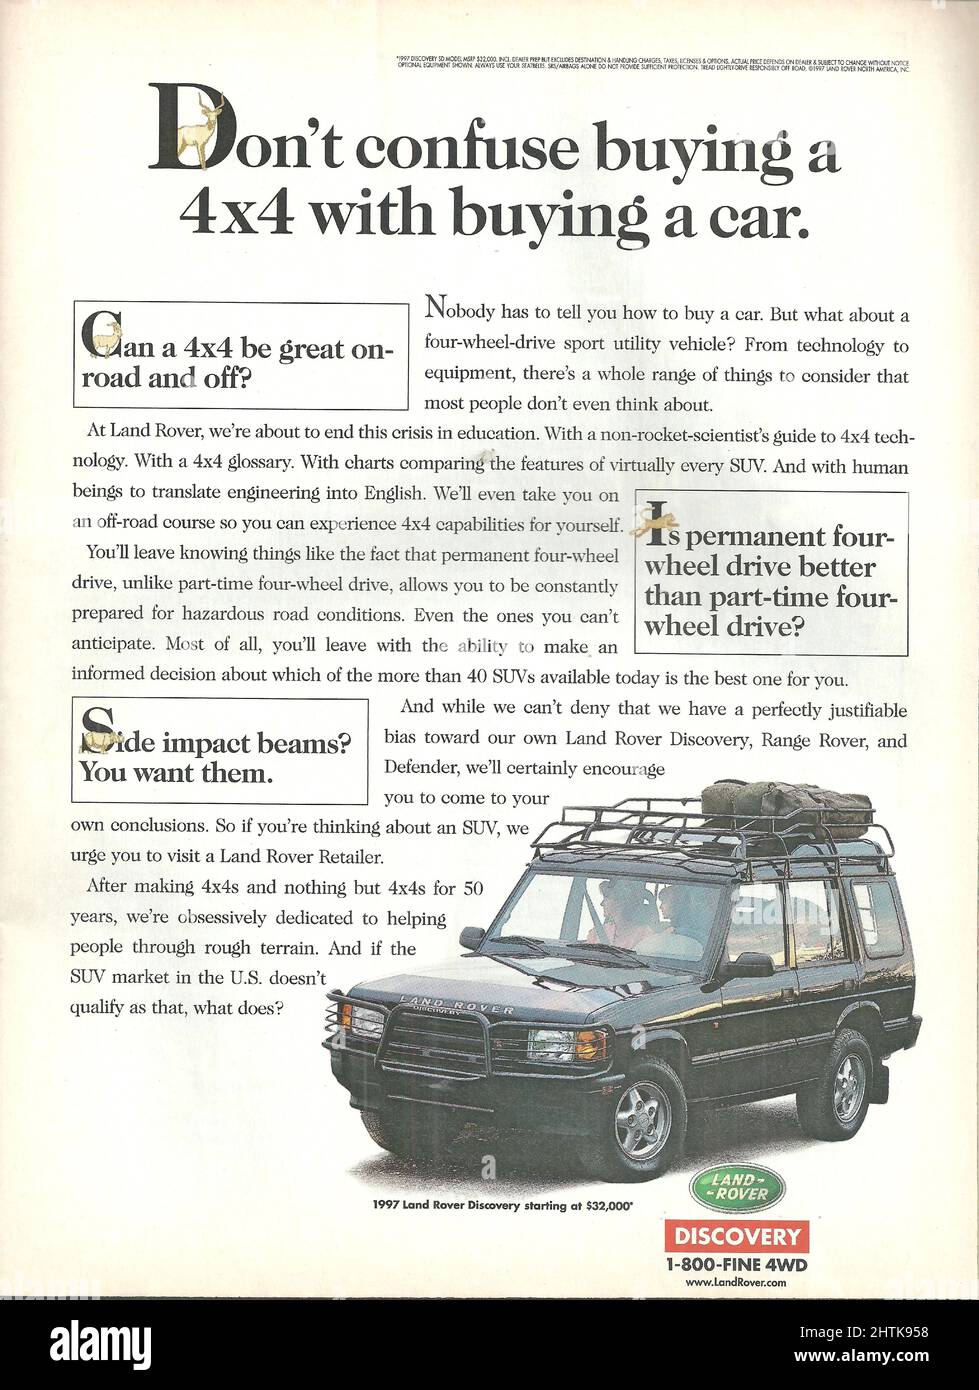 Ranger rover 4x4 Land Rover paper advertisement advert car 1980s 1990s Stock Photo